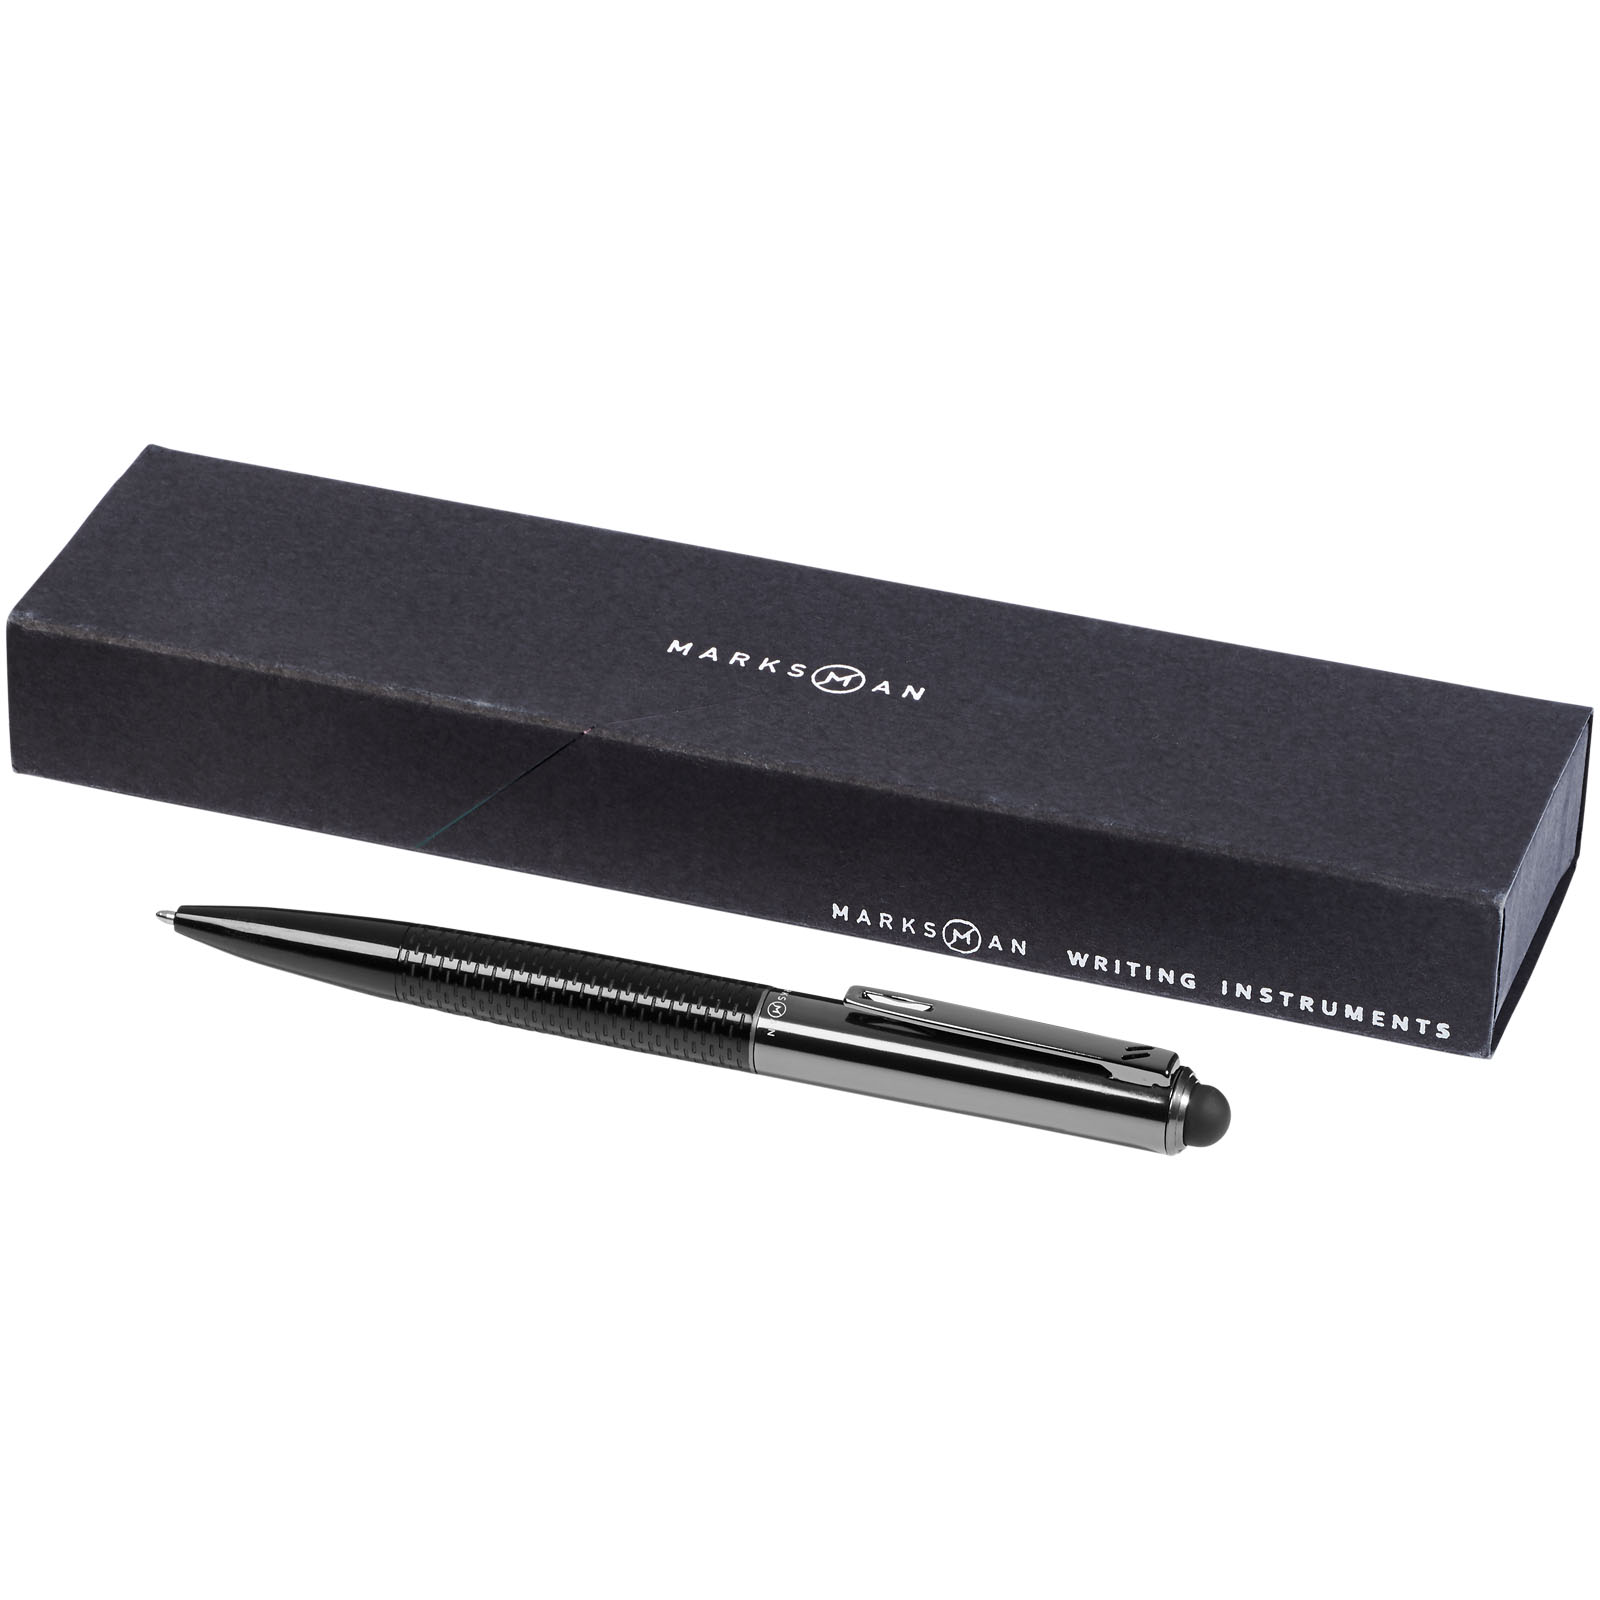 Advertising Ballpoint Pens - Dash stylus ballpoint pen